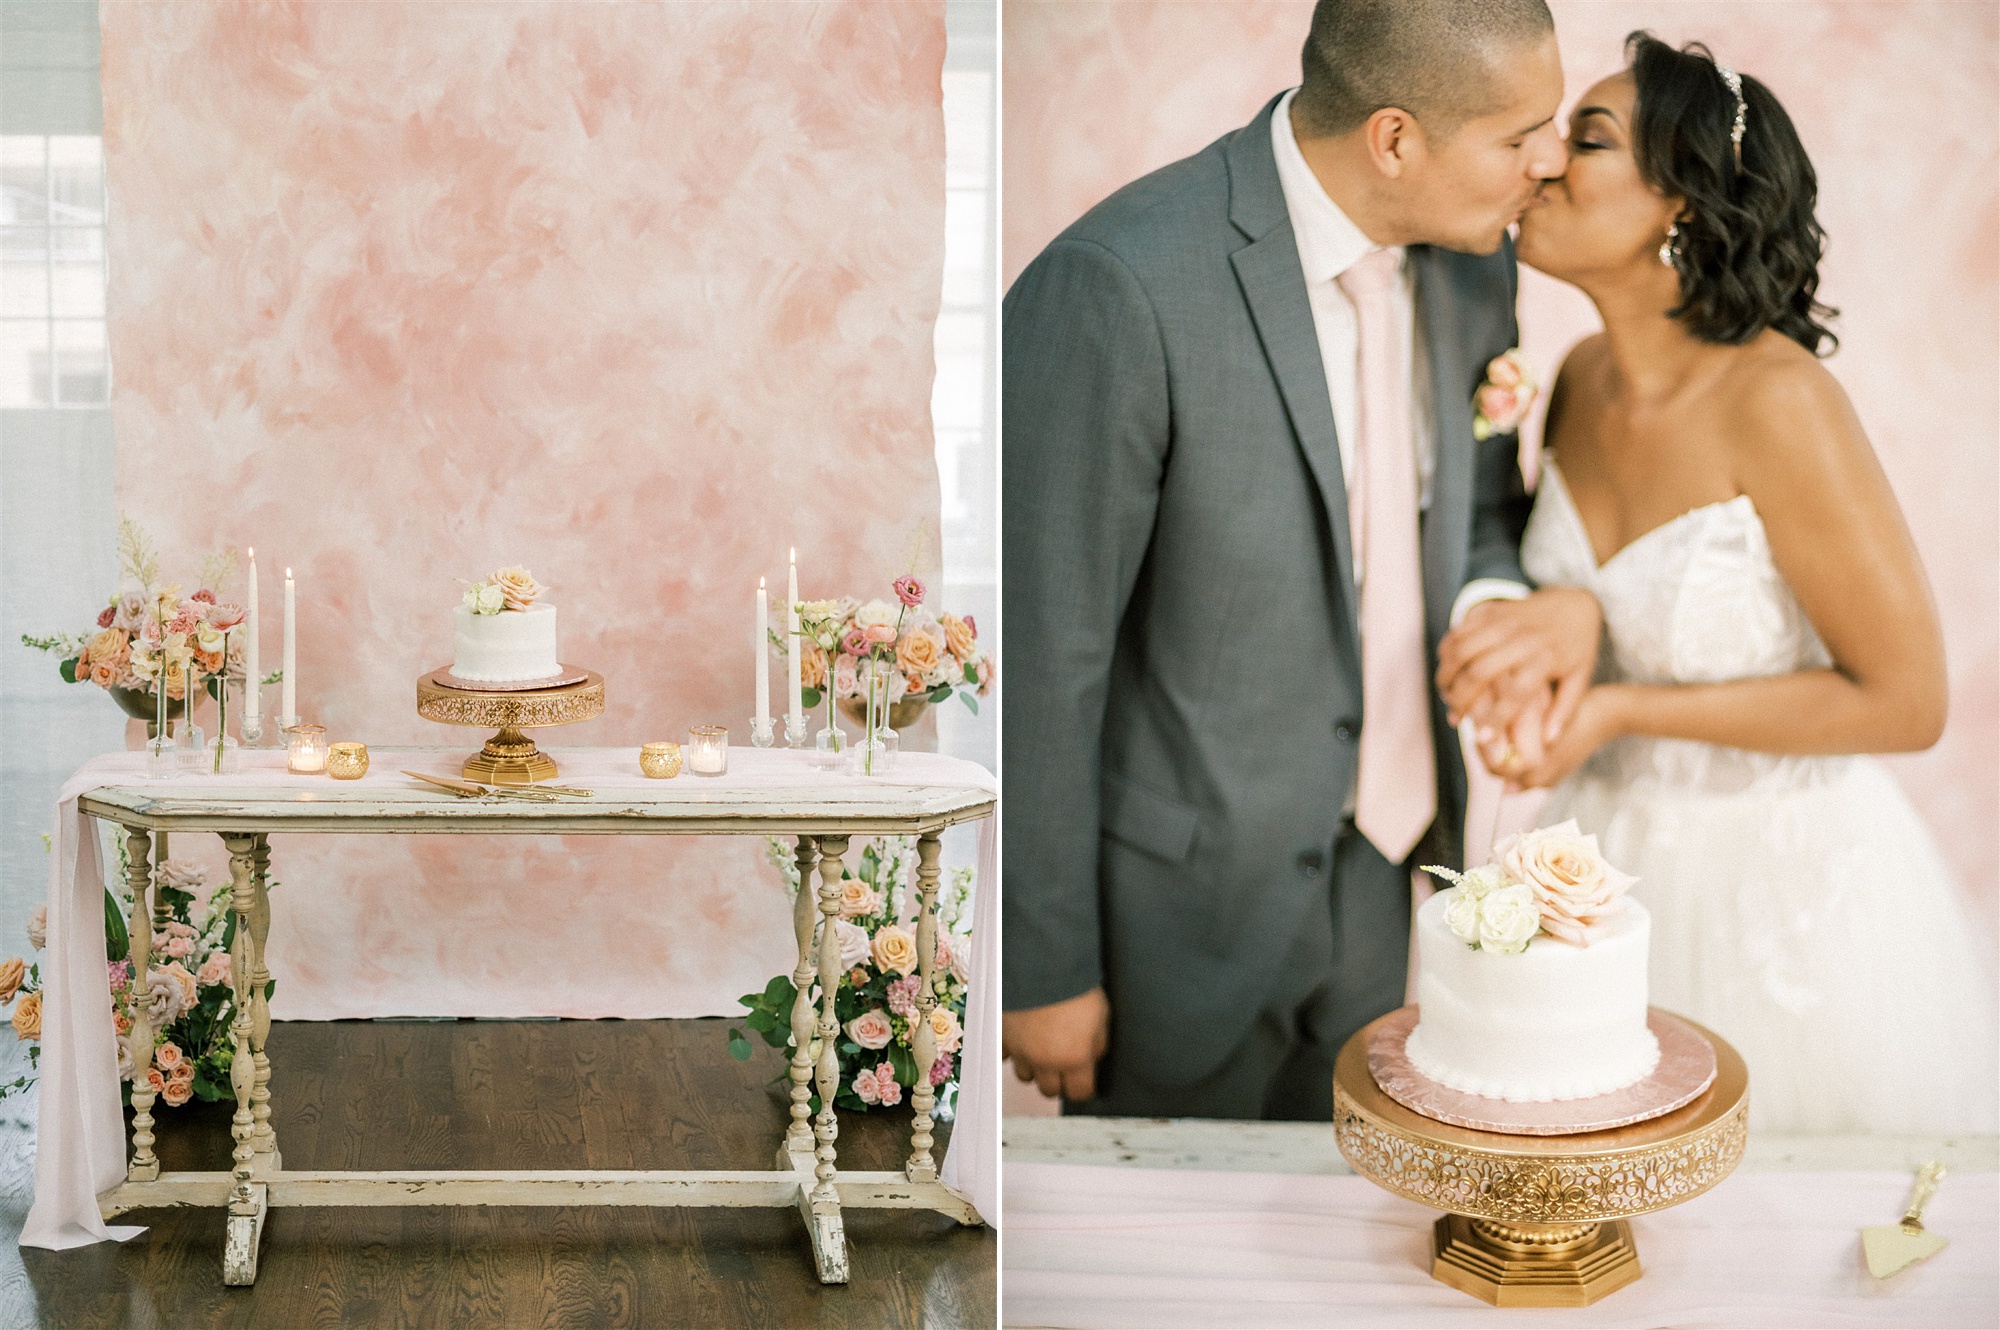 bride and groom cut wedding cake